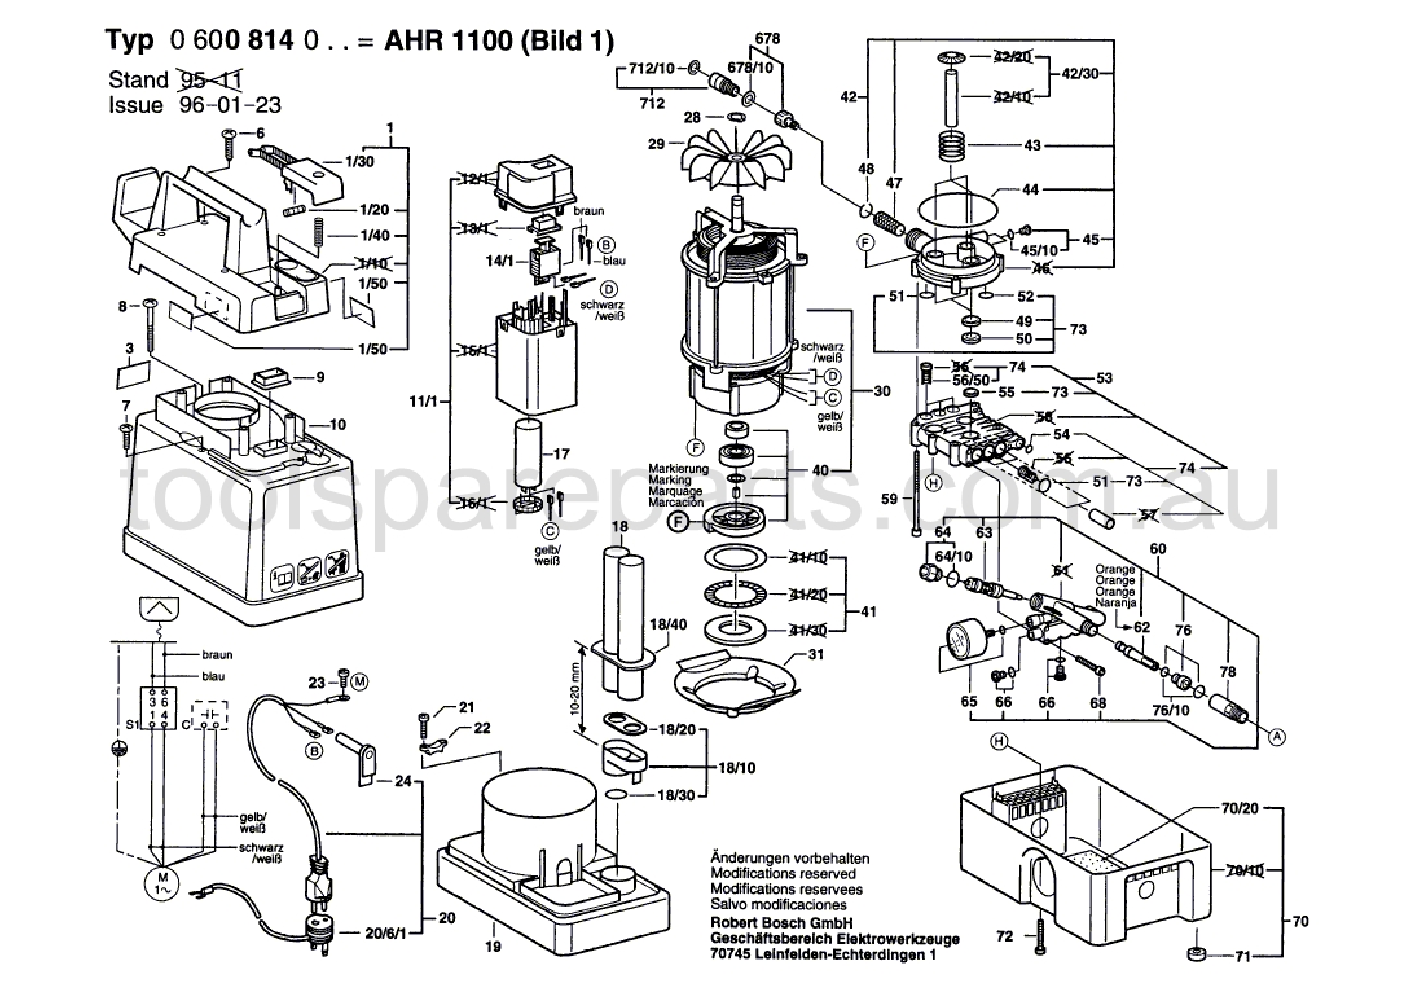 Bosch AHR 1100 0600814037  Diagram 1